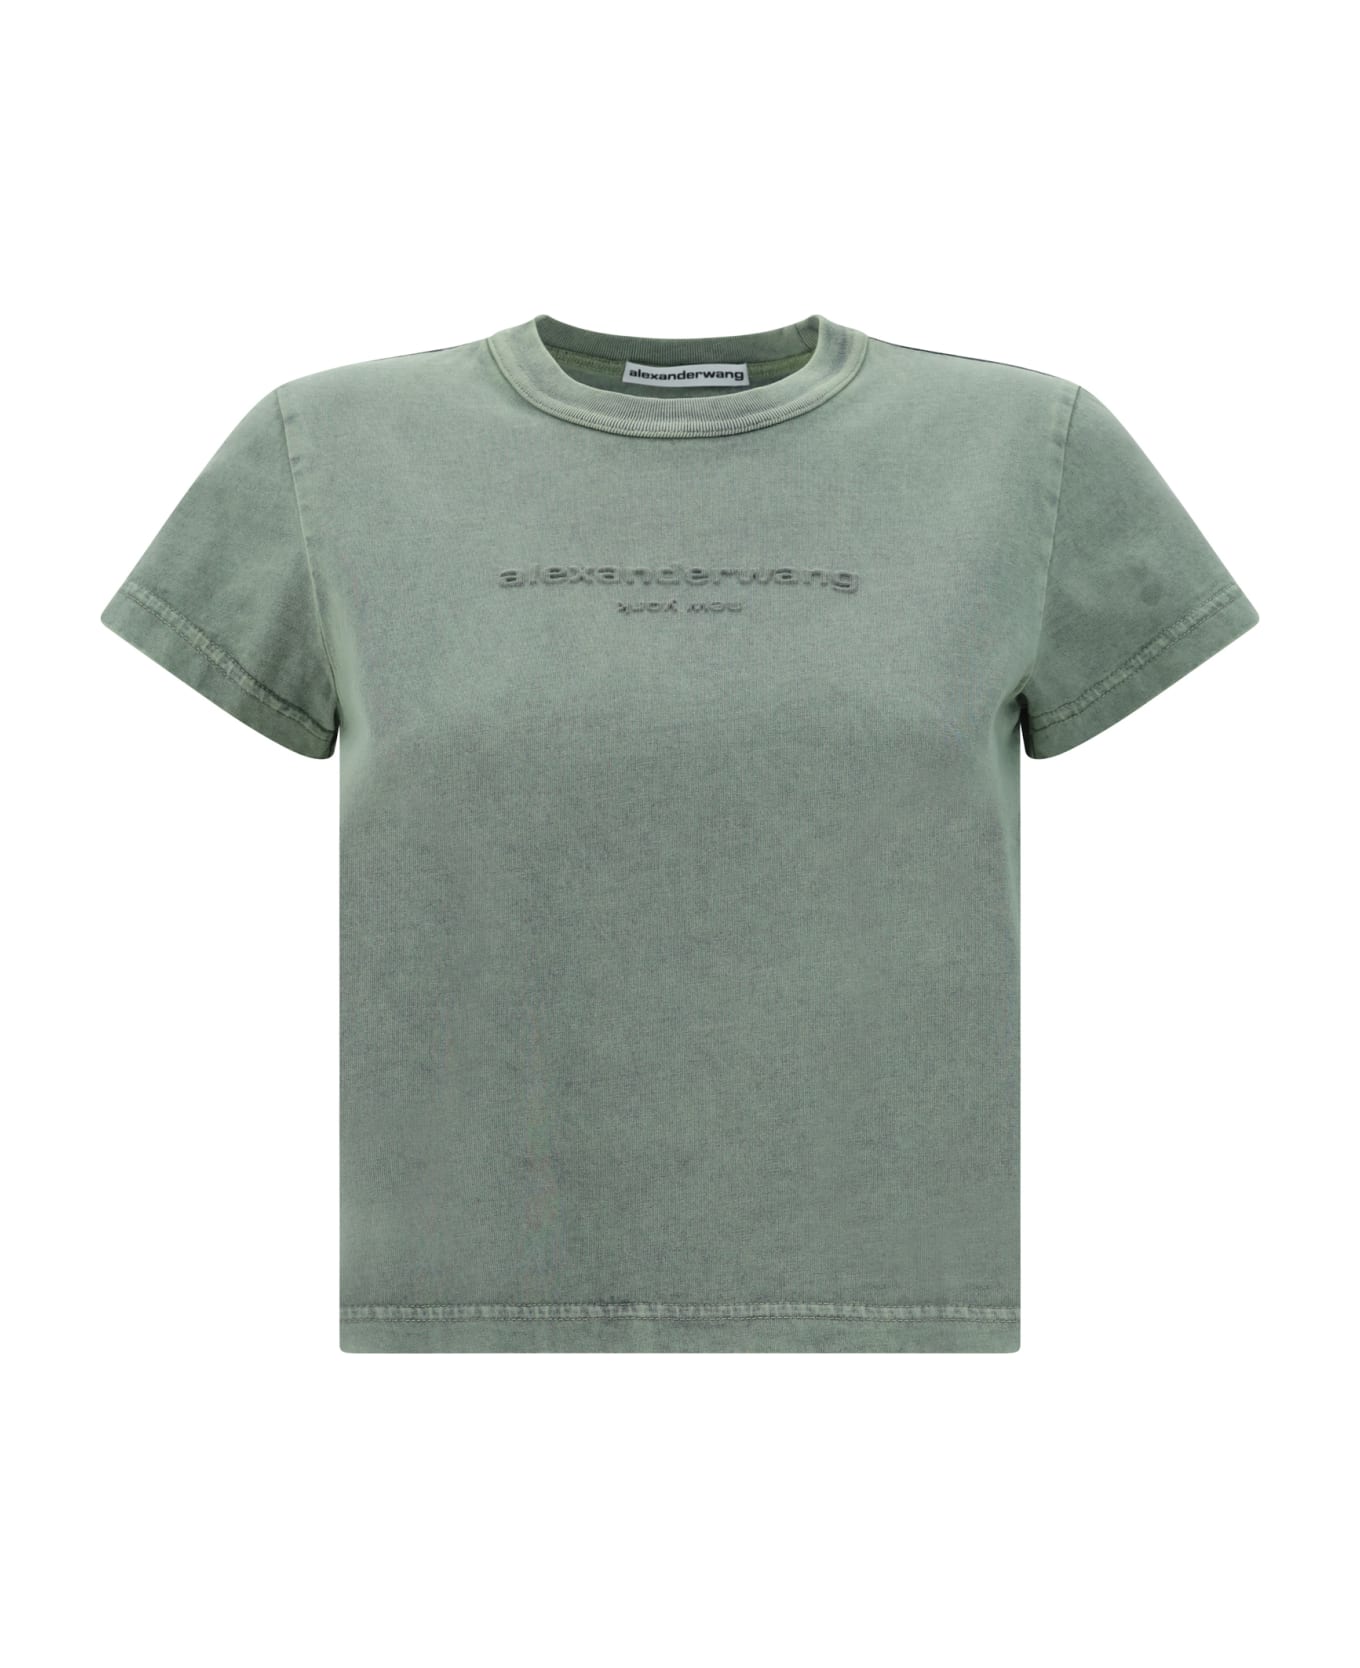 Alexander Wang T-shirt - miu miu crystal embellished cropped shirt item